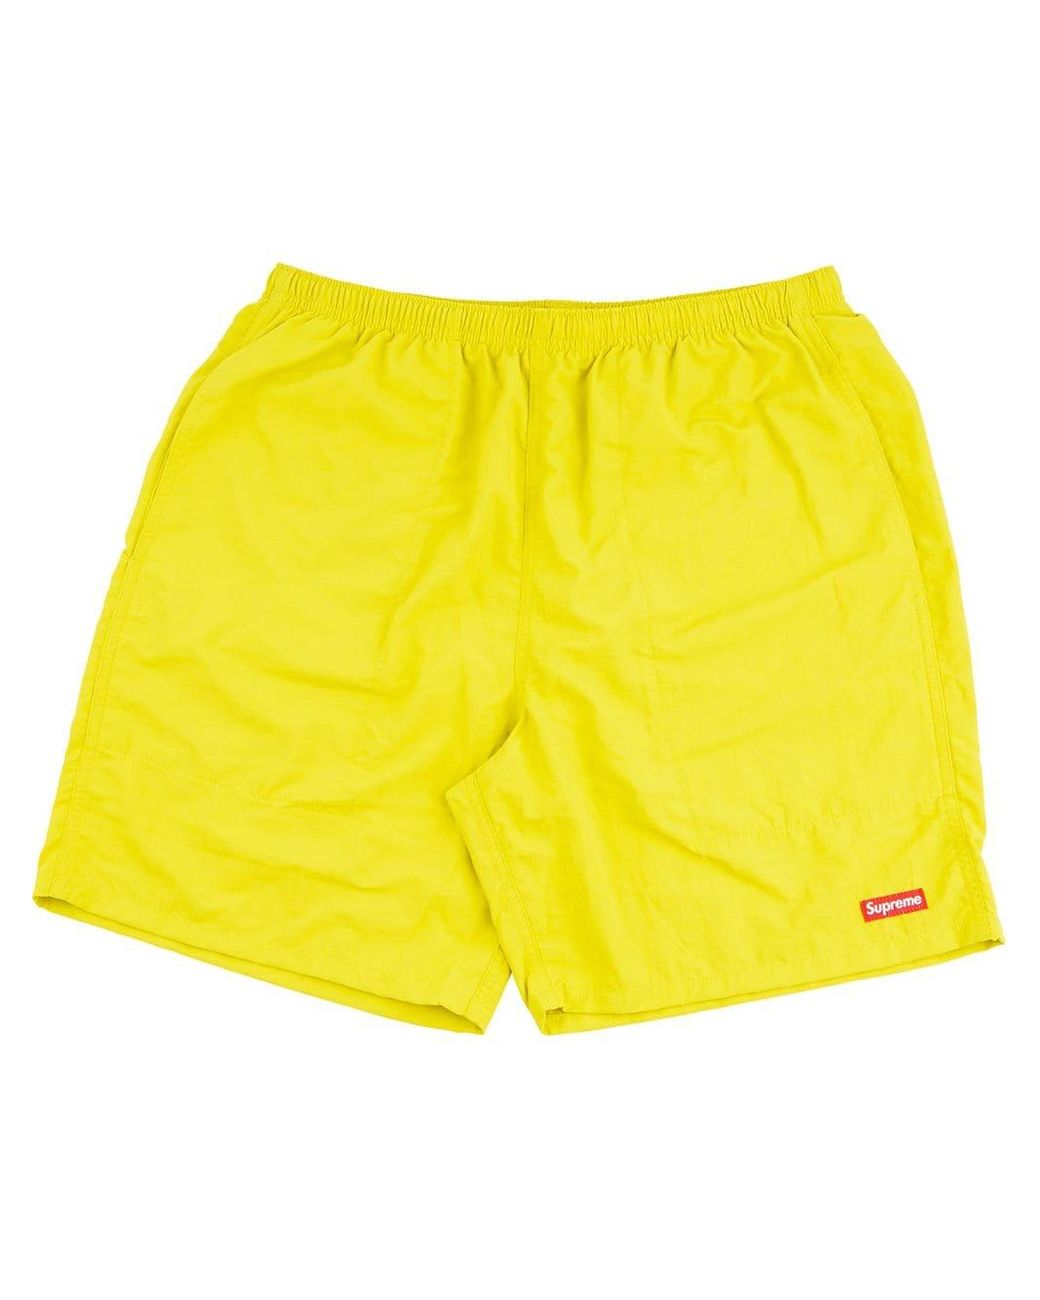 https://cdna.lystit.com/1040/1300/n/photos/farfetch/8d4bfa9e/supreme-yellow-Box-logo-Swim-Shorts.jpeg